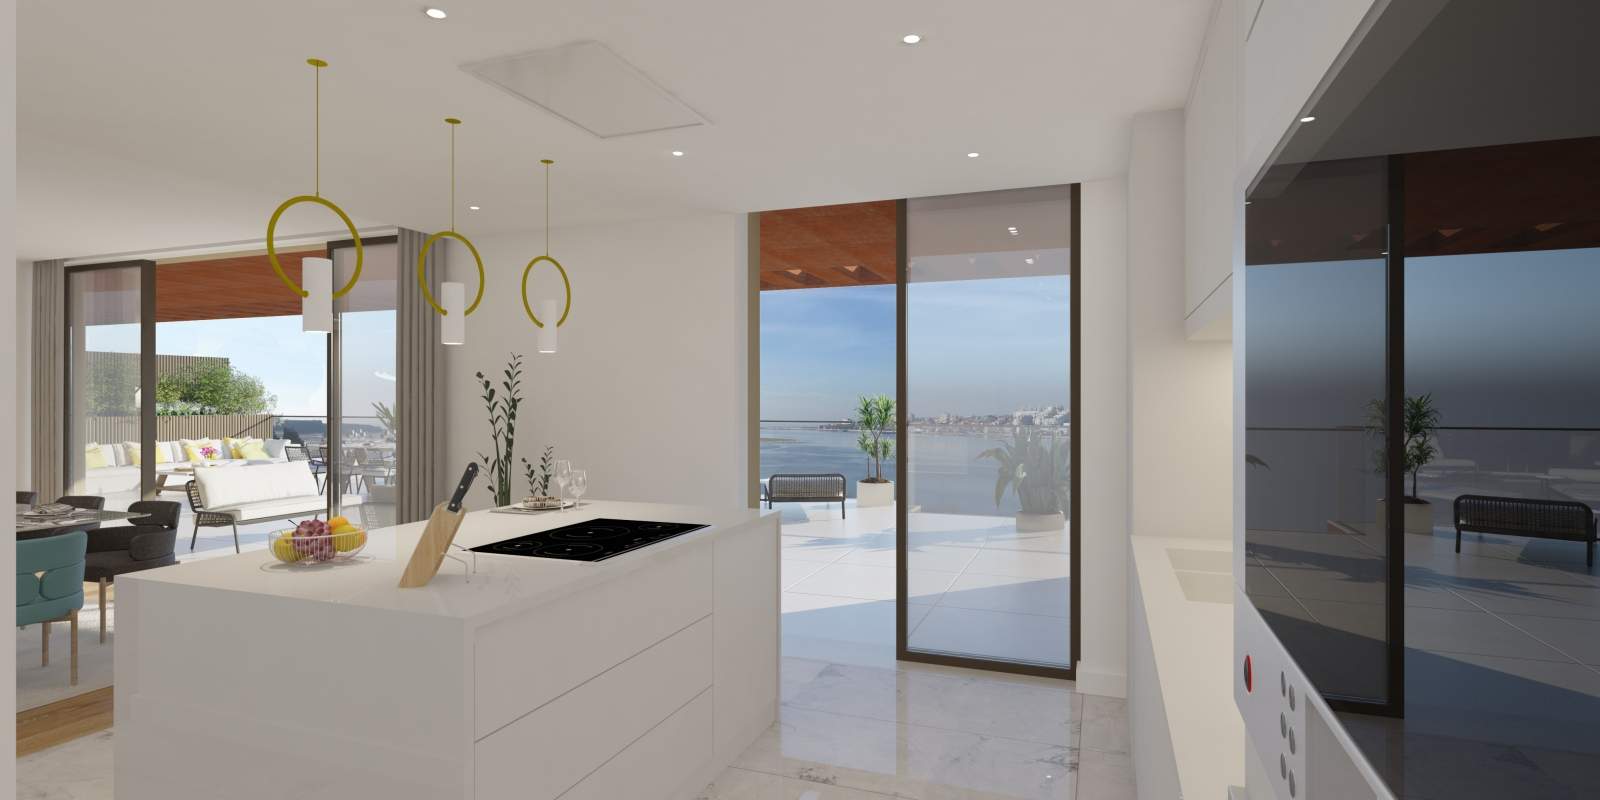 Apartment for sale with terrace, in exclusive condominium, V. N. Gaia, Porto, Portugal_175778